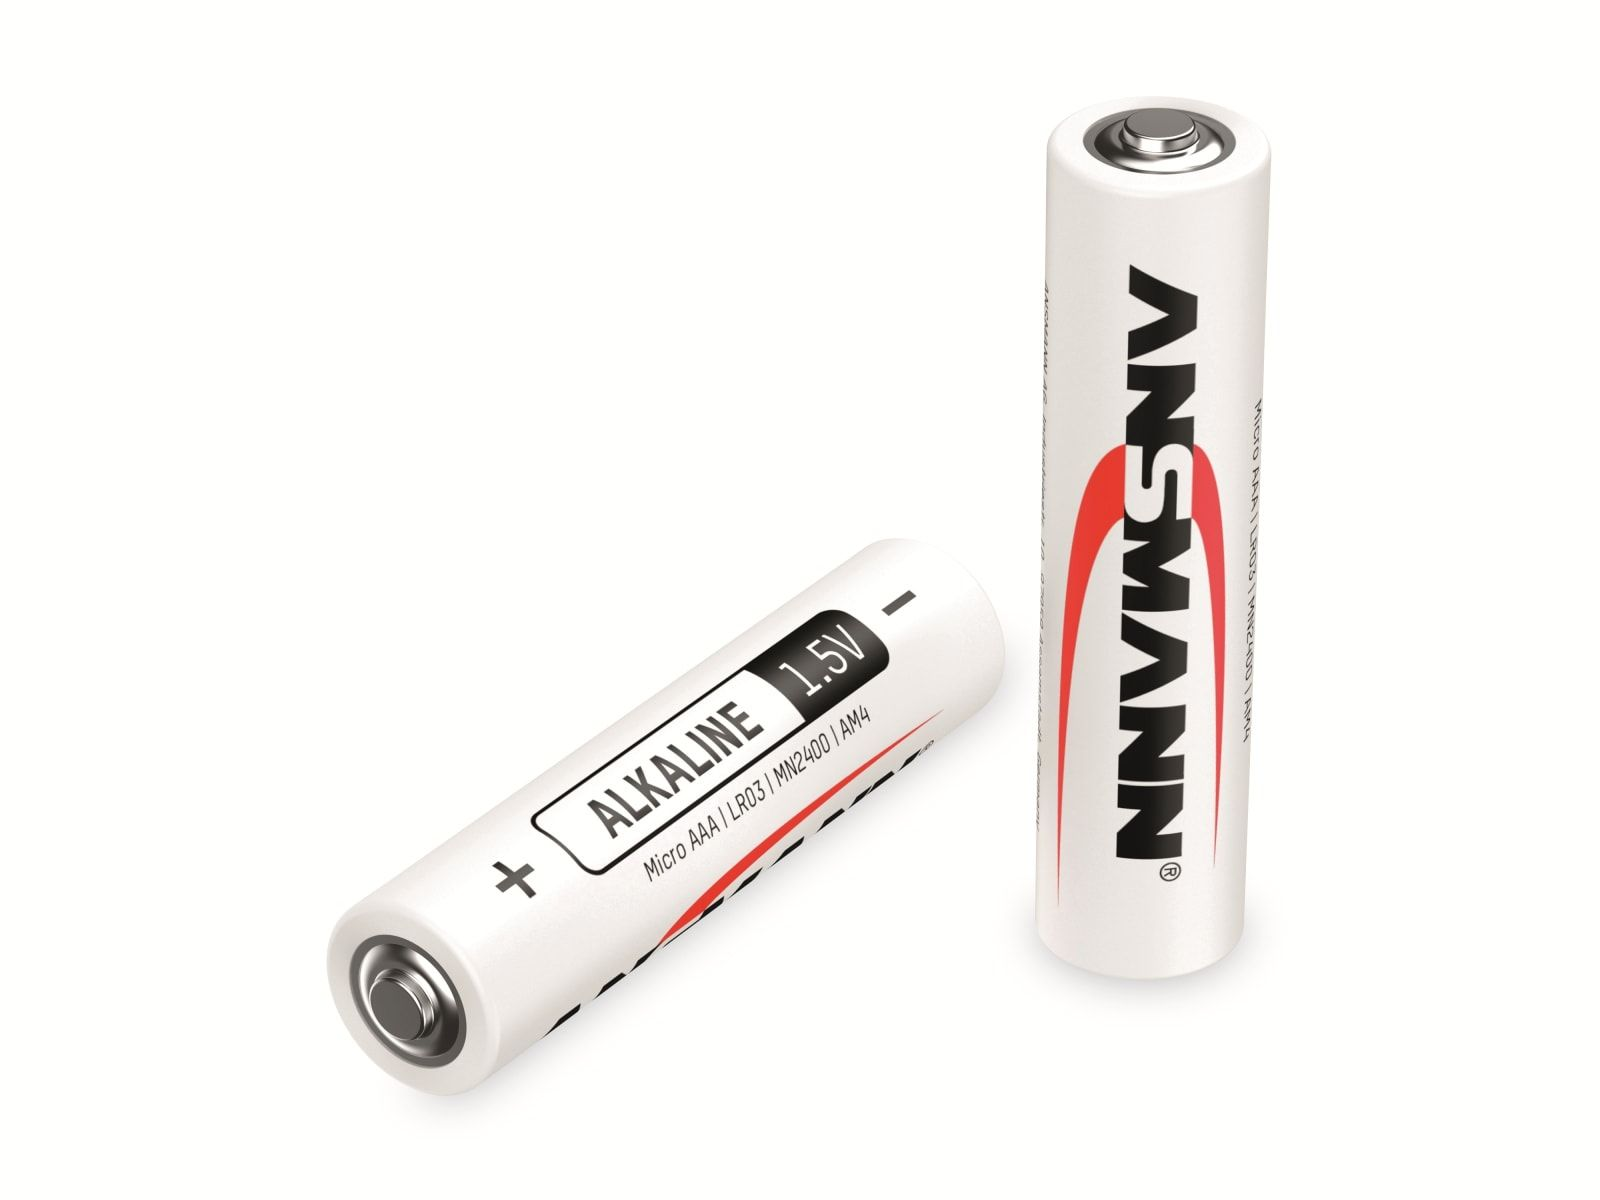 16x Micro Alkaline 46 Batterien ANSMANN Mignon, Stück, 30x Batterie-Set, Alkaline,